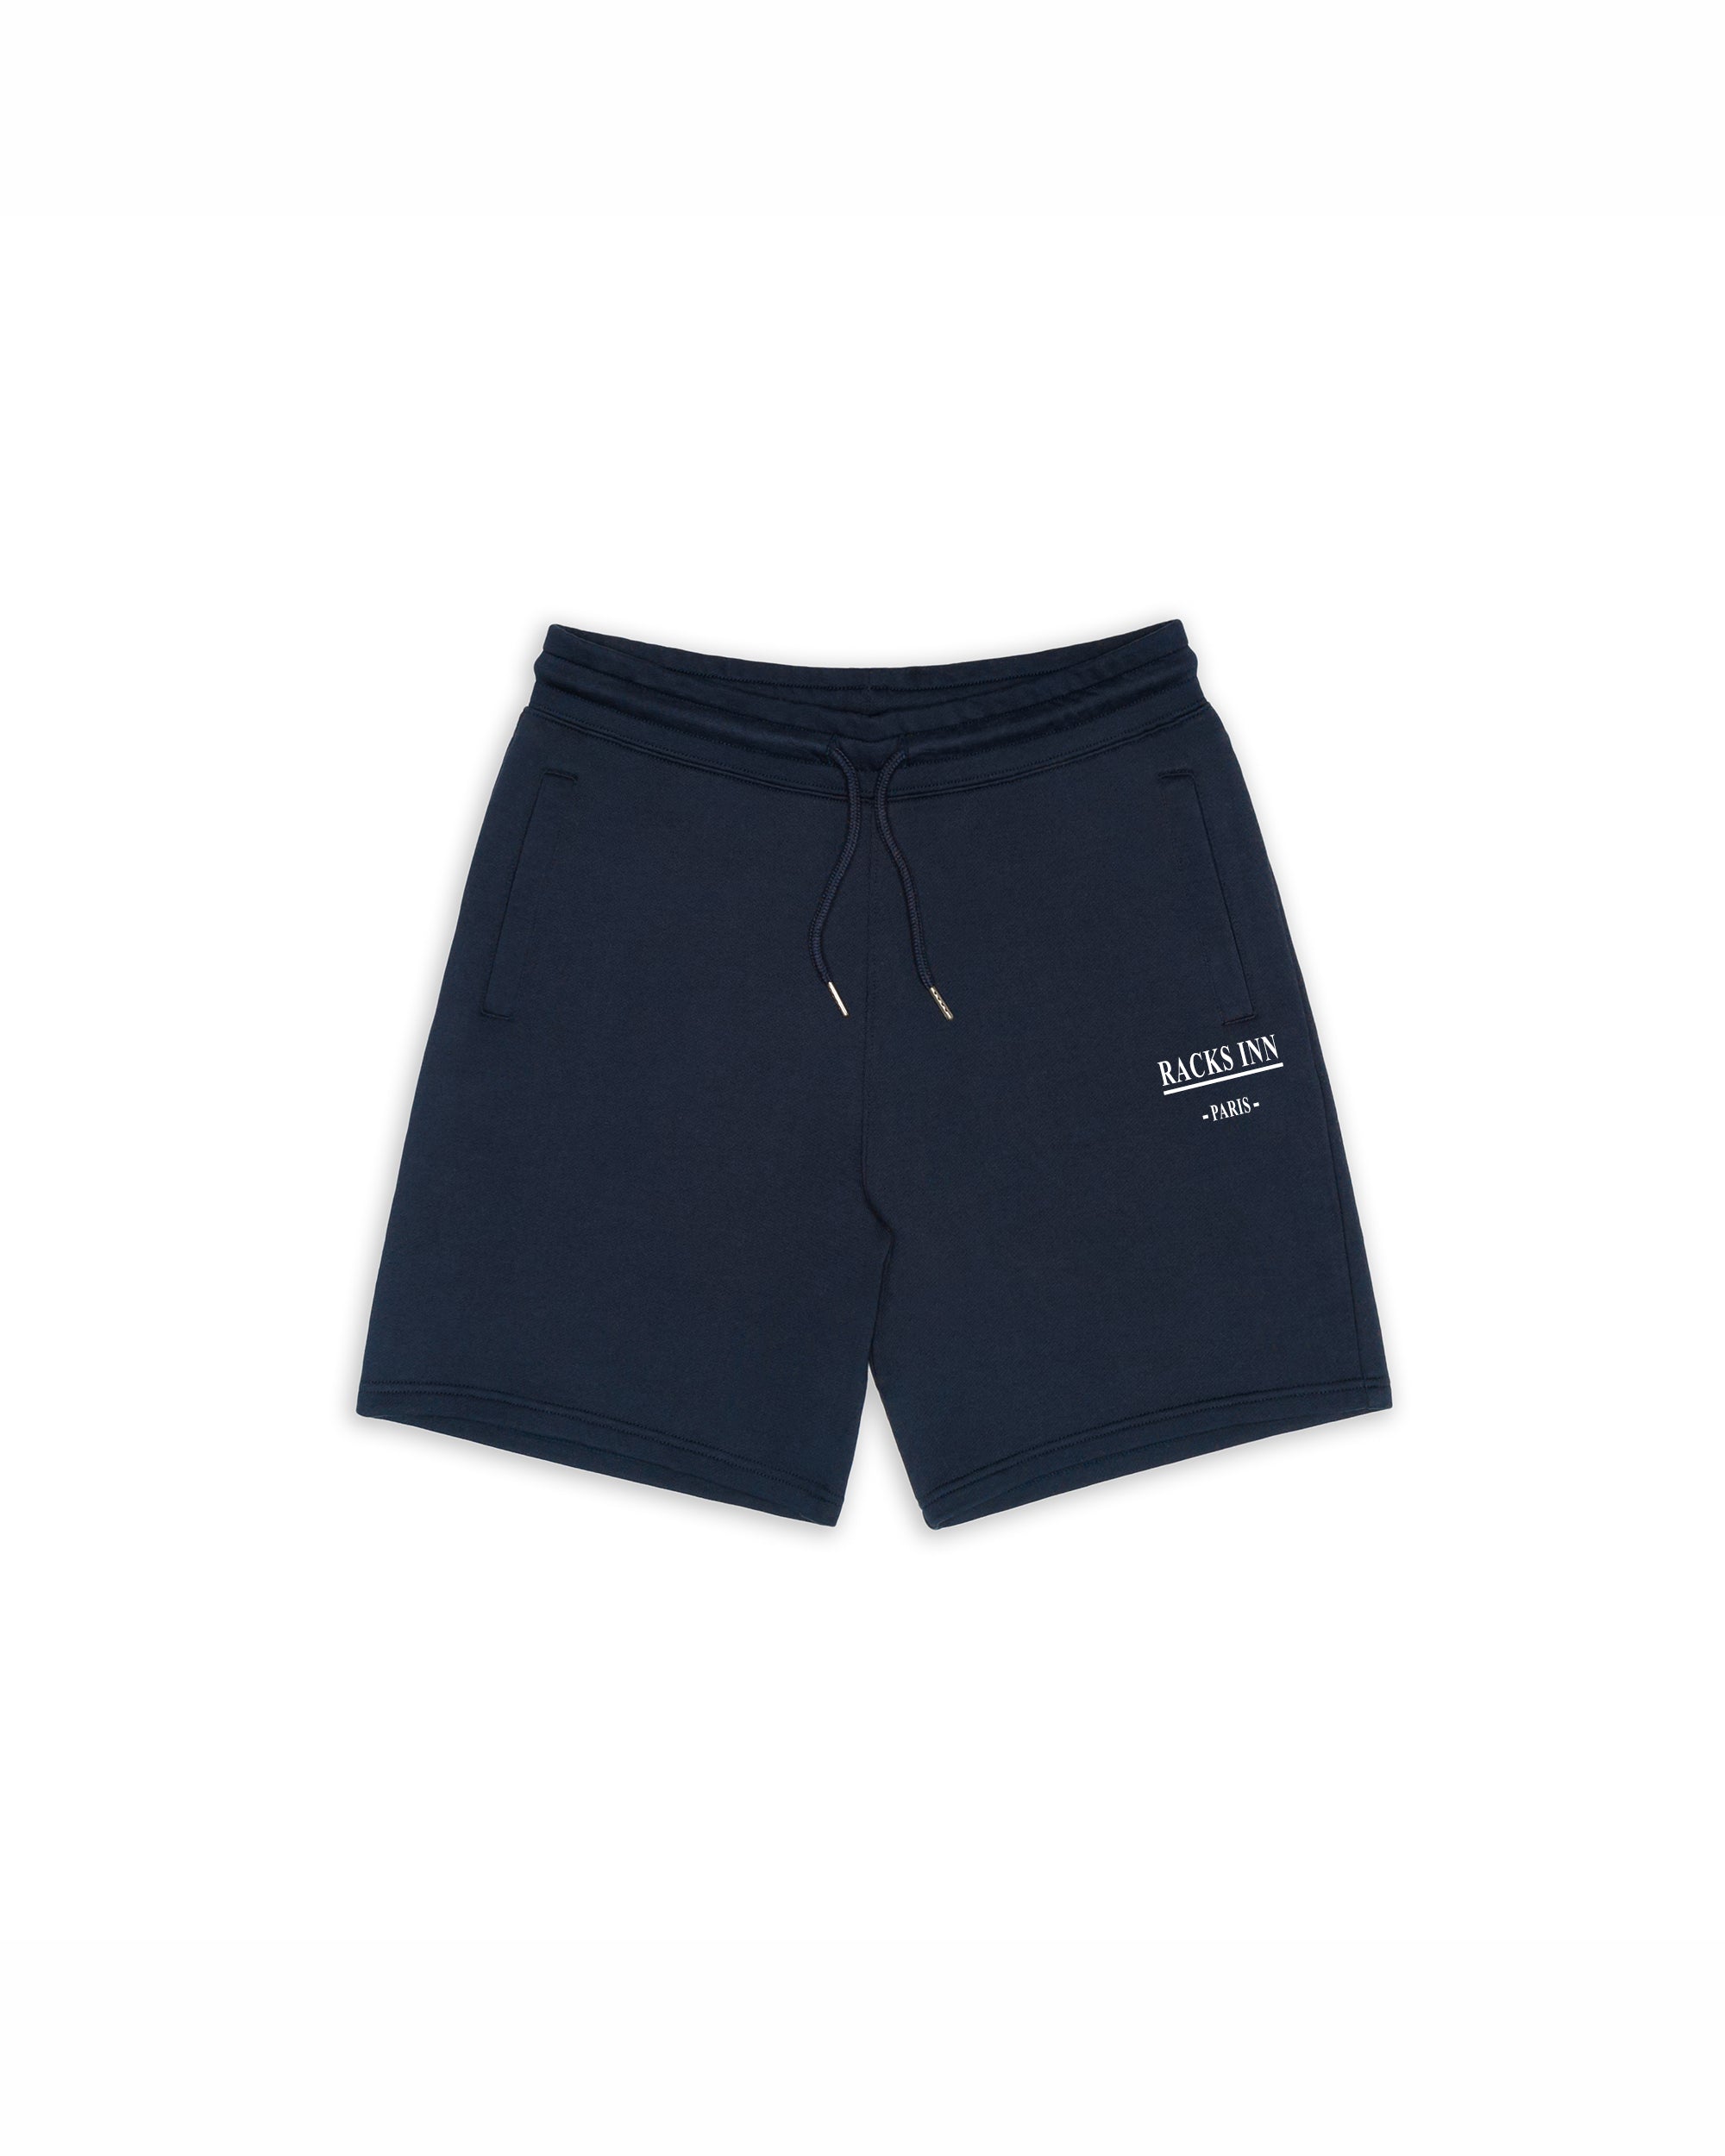 Paris Shorts - Navy